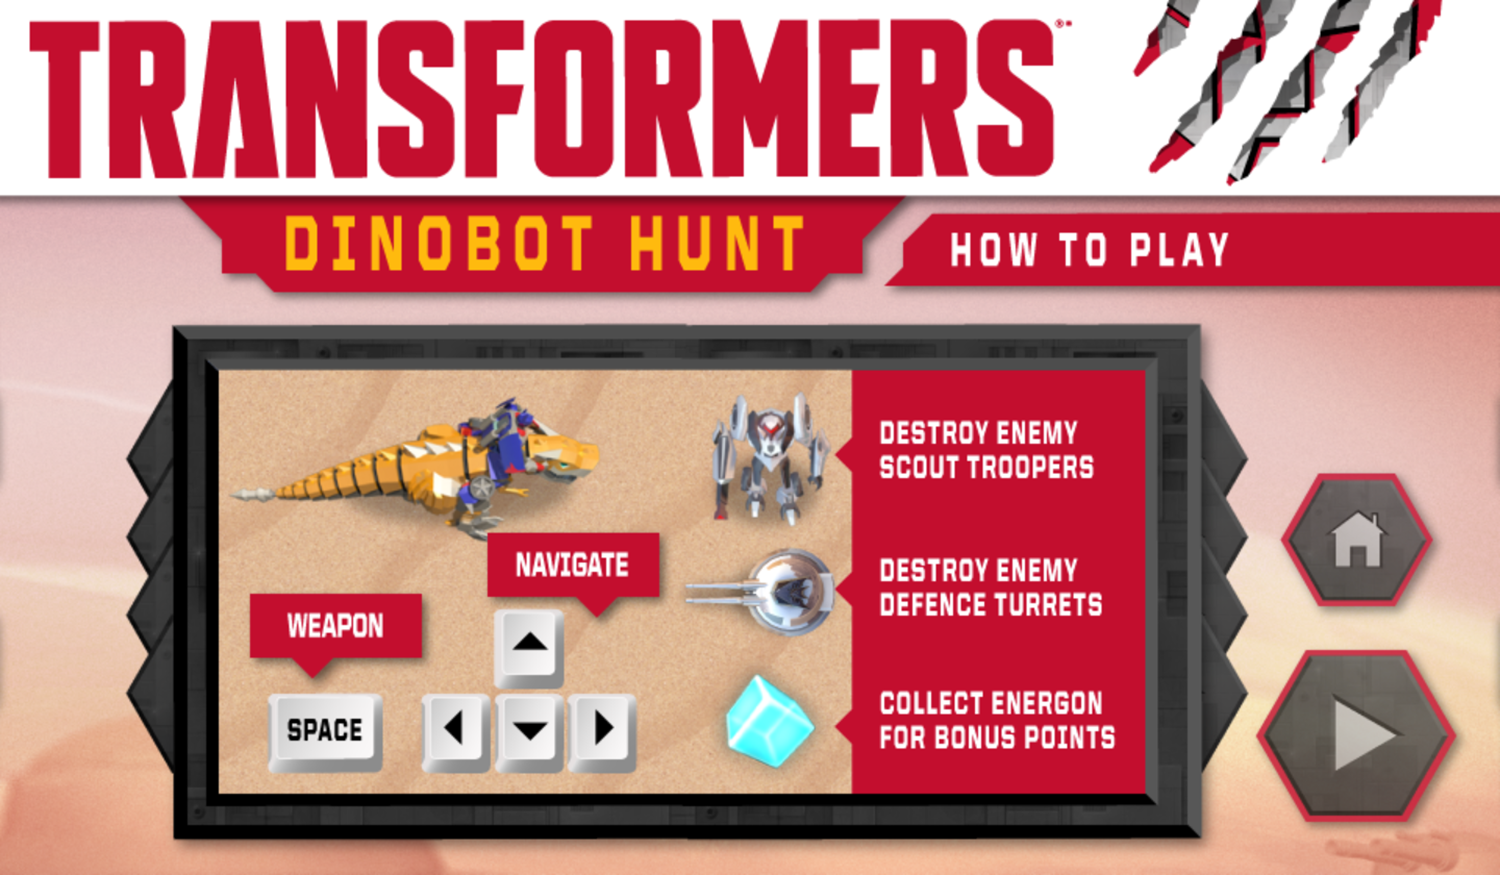 Transformers Dinobot Hunt Game How To Play Screenshot.